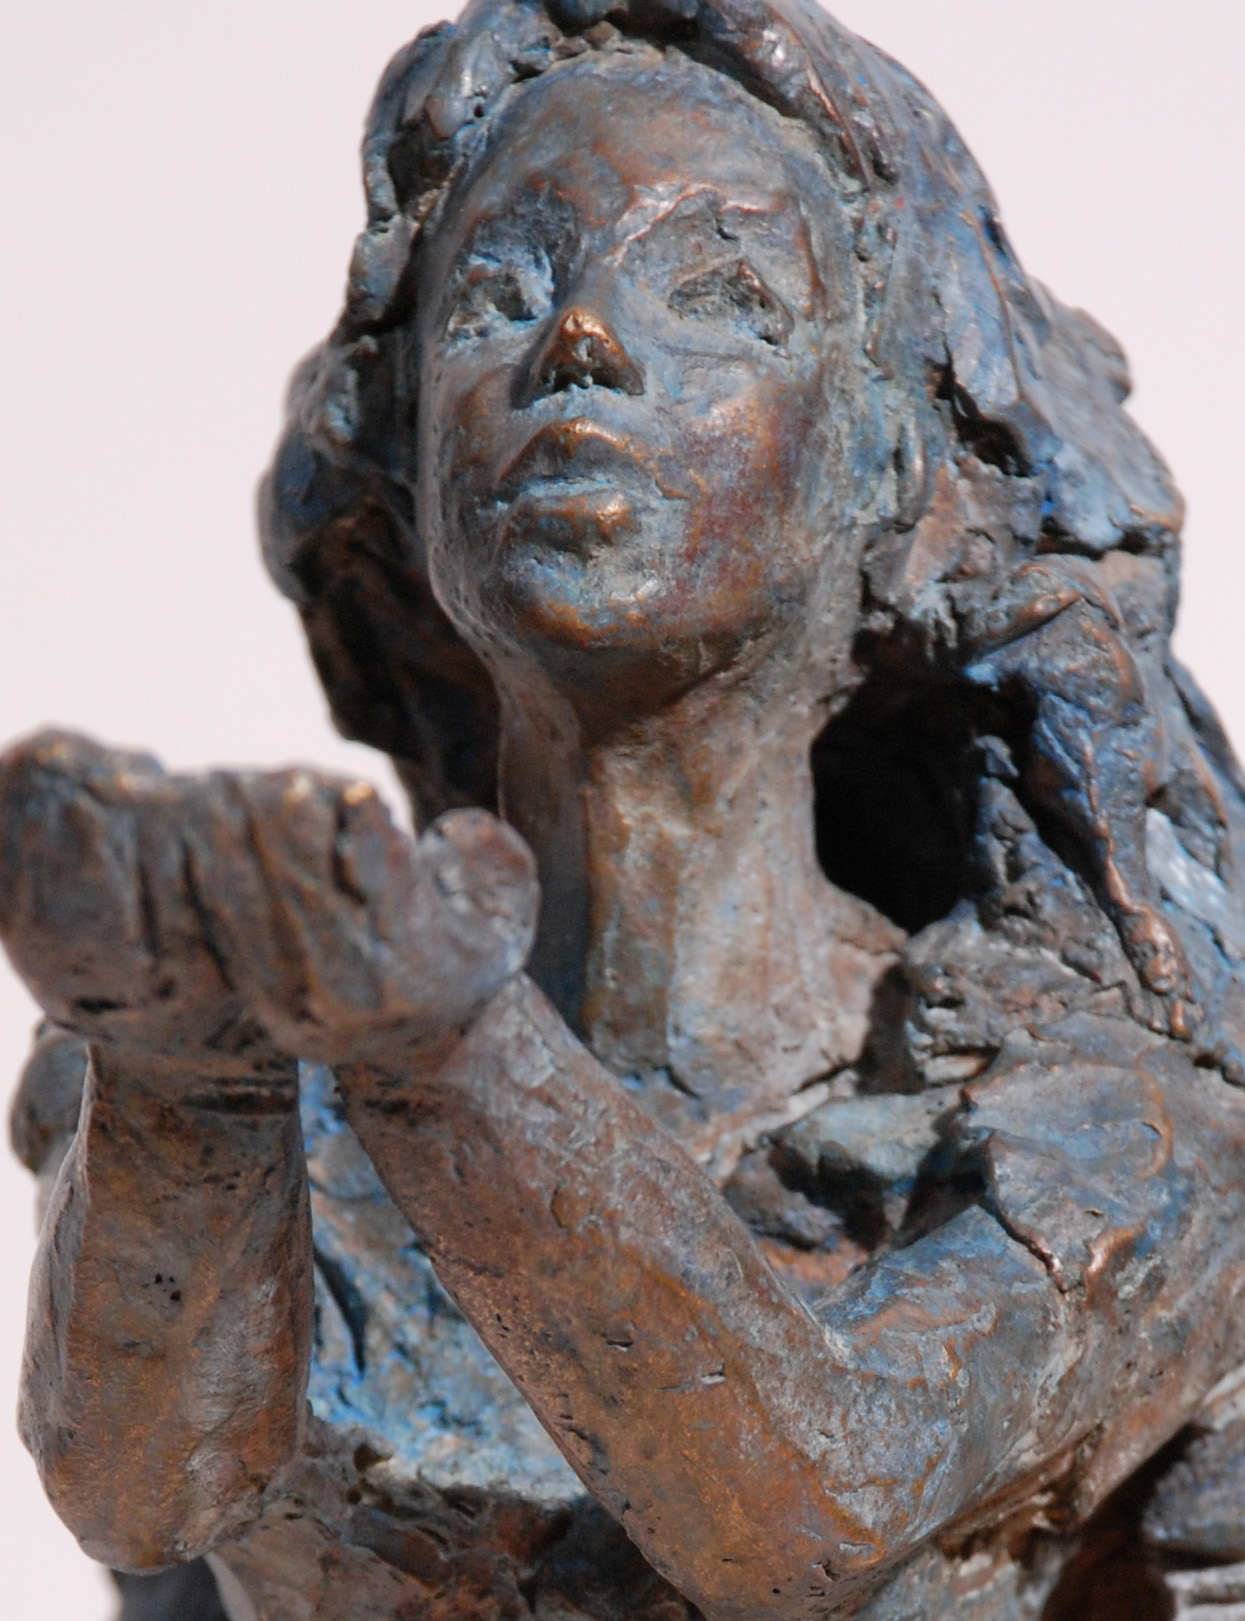 Gissinger Mariele – Sculpture – Bronzes – Modelage – Terre – Ton - Céramique – Porcelaine – Porcelain – Artiste - Art-gm – Alsace - France